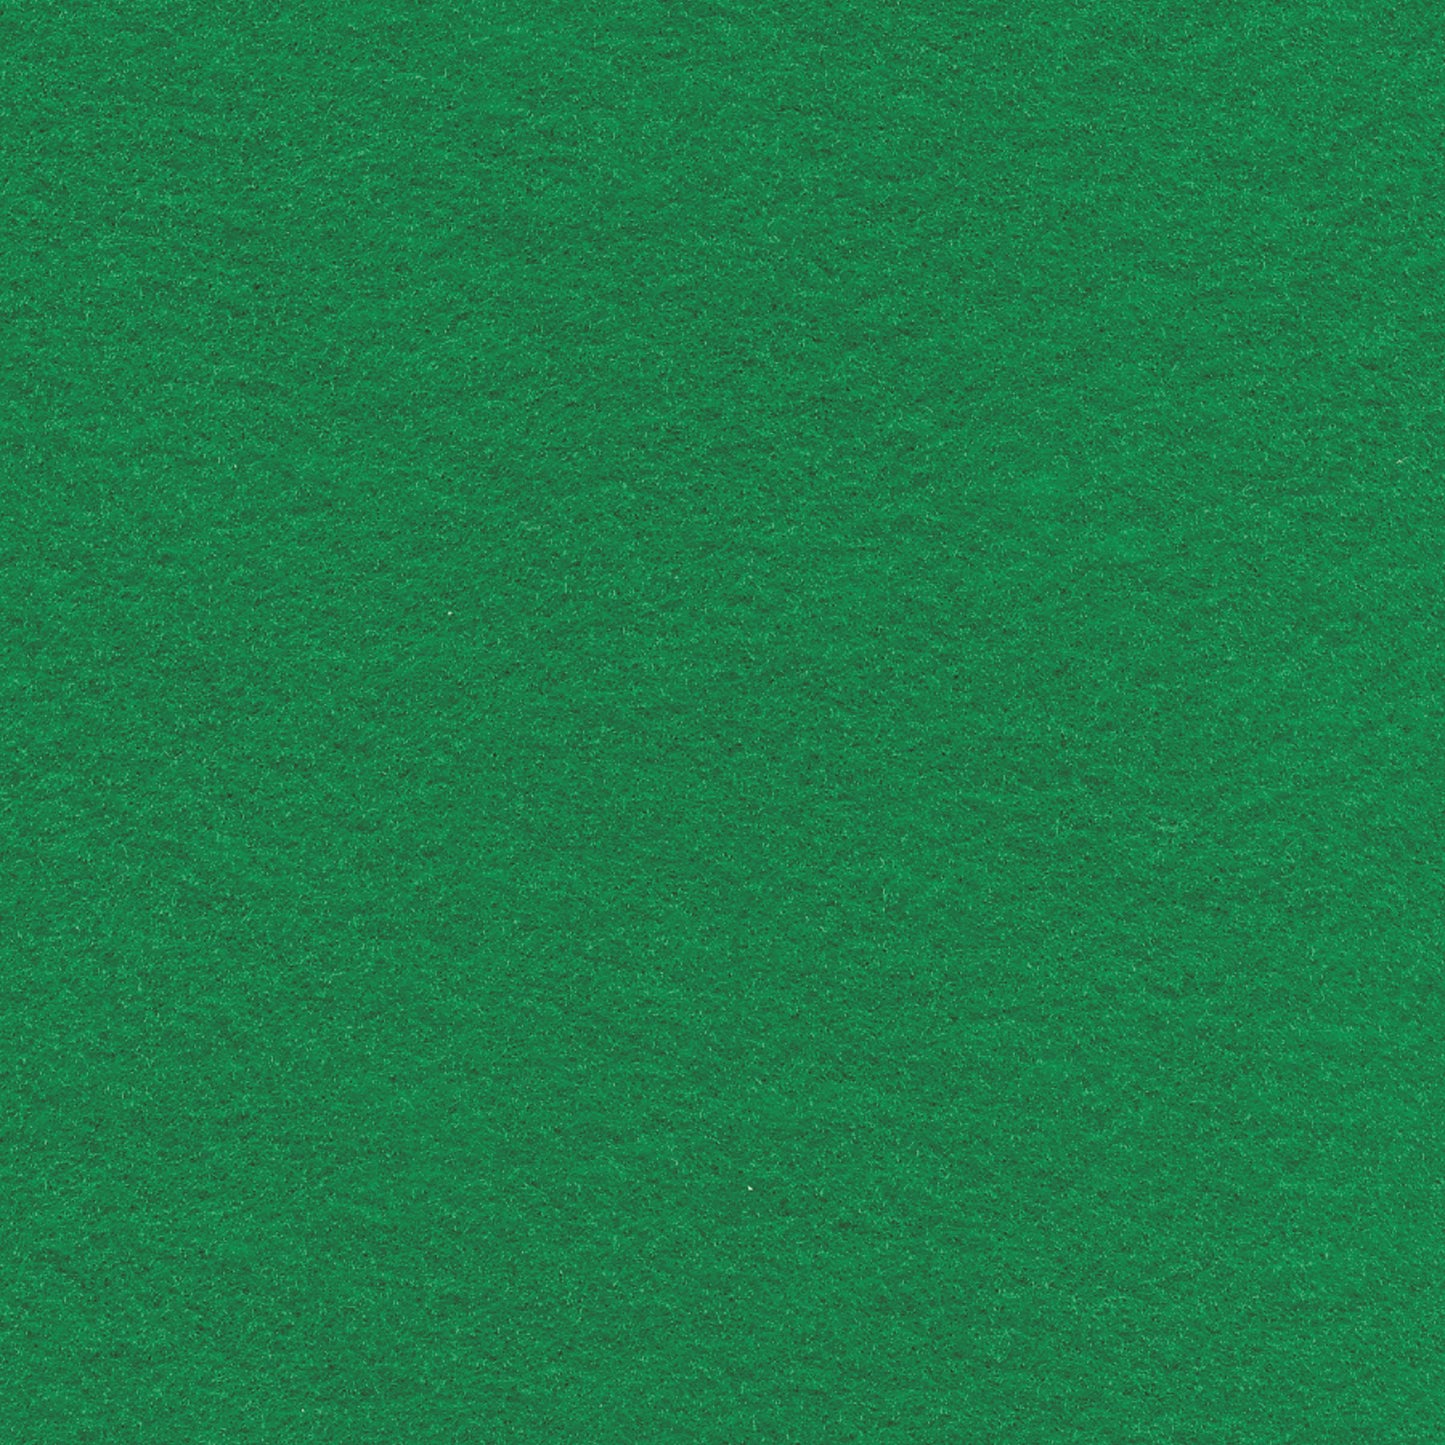 Pirate Green Eco-fi Felt 9x12 Sheet